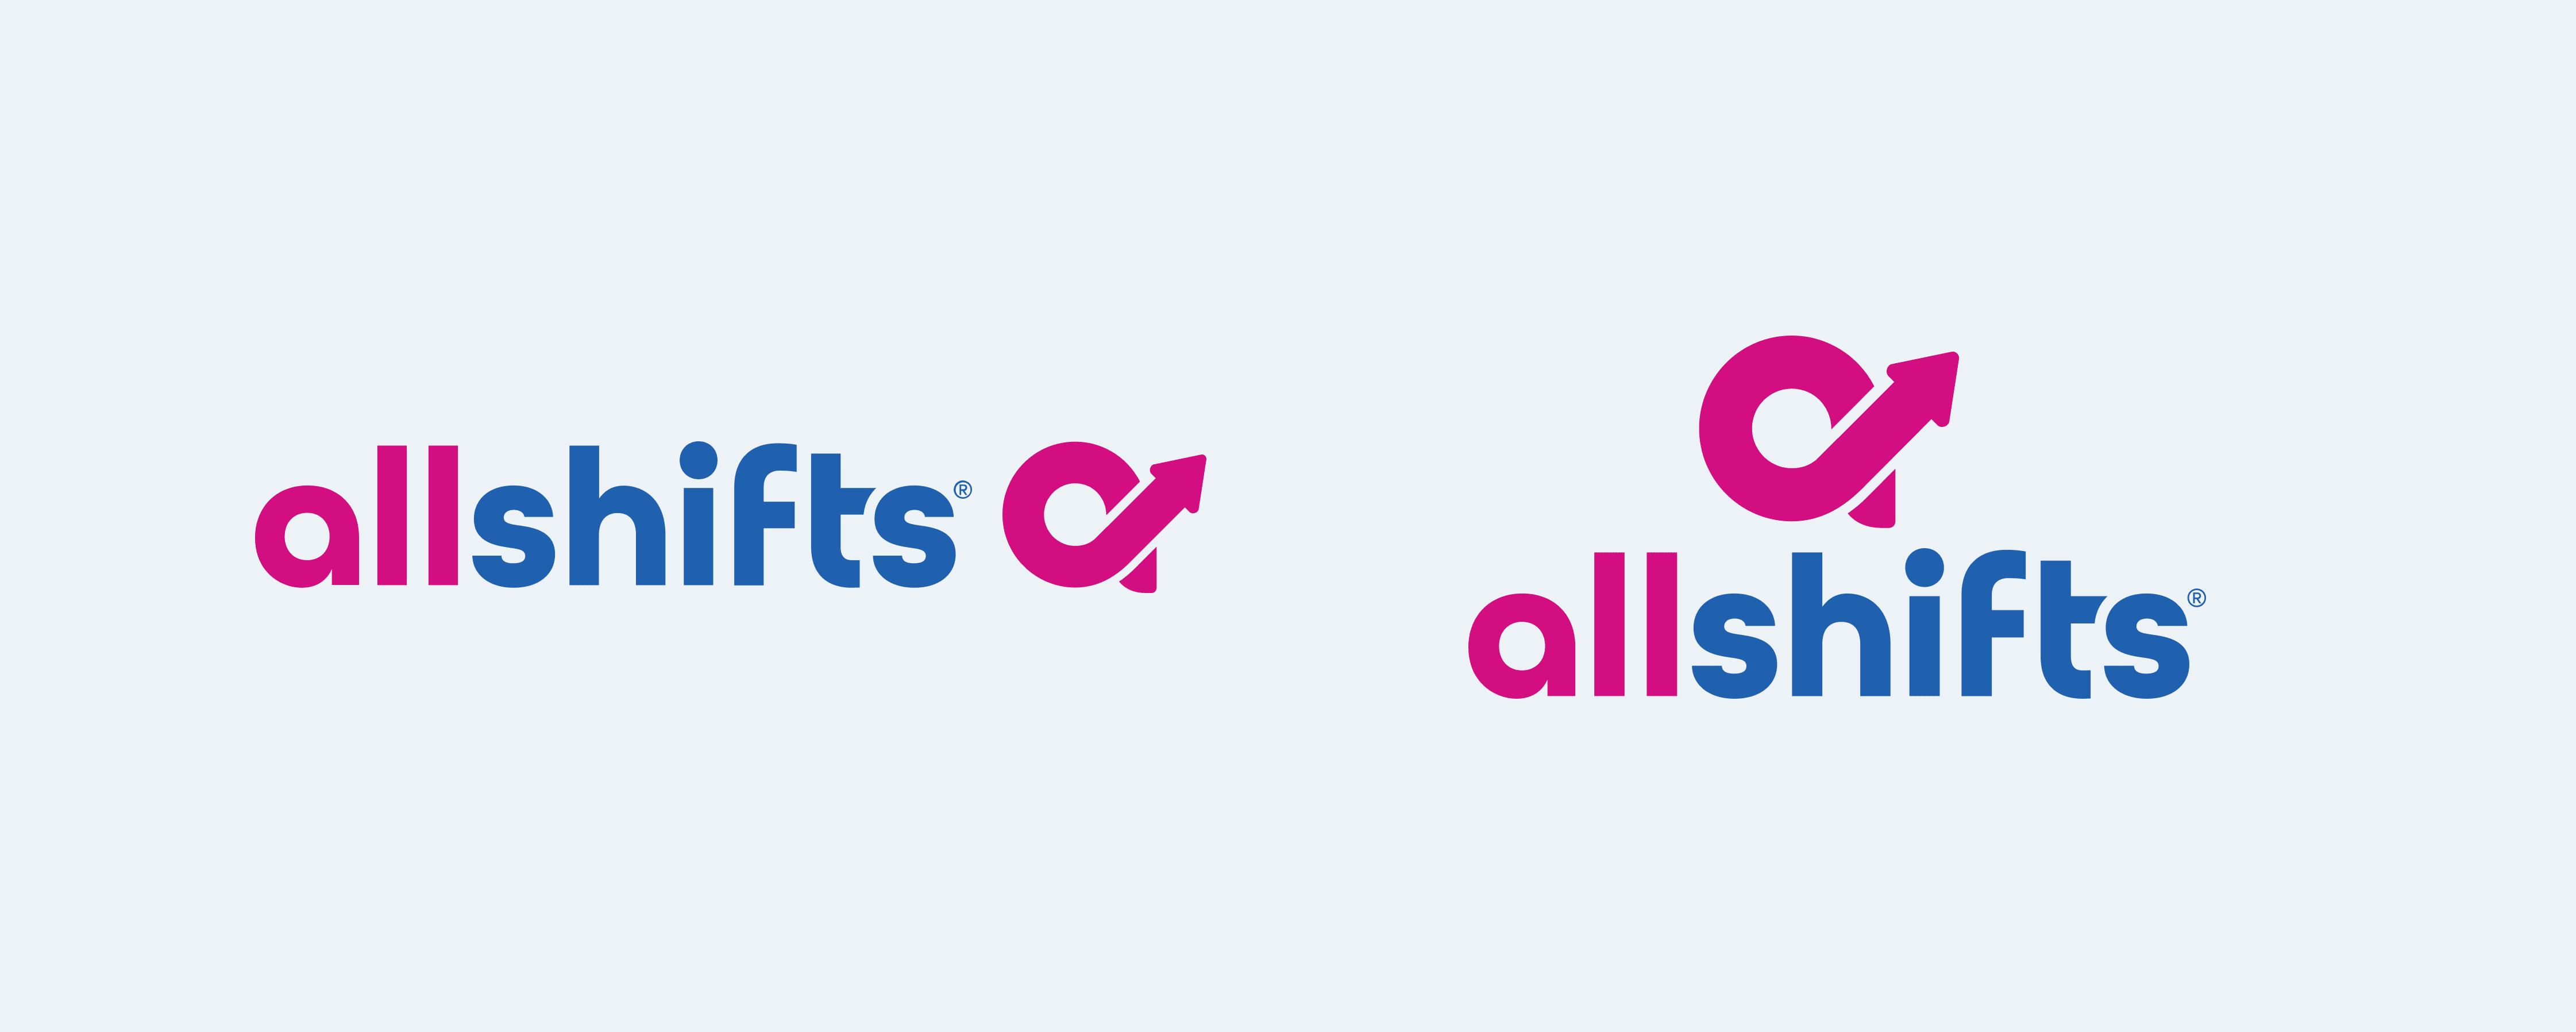 allshifts logo